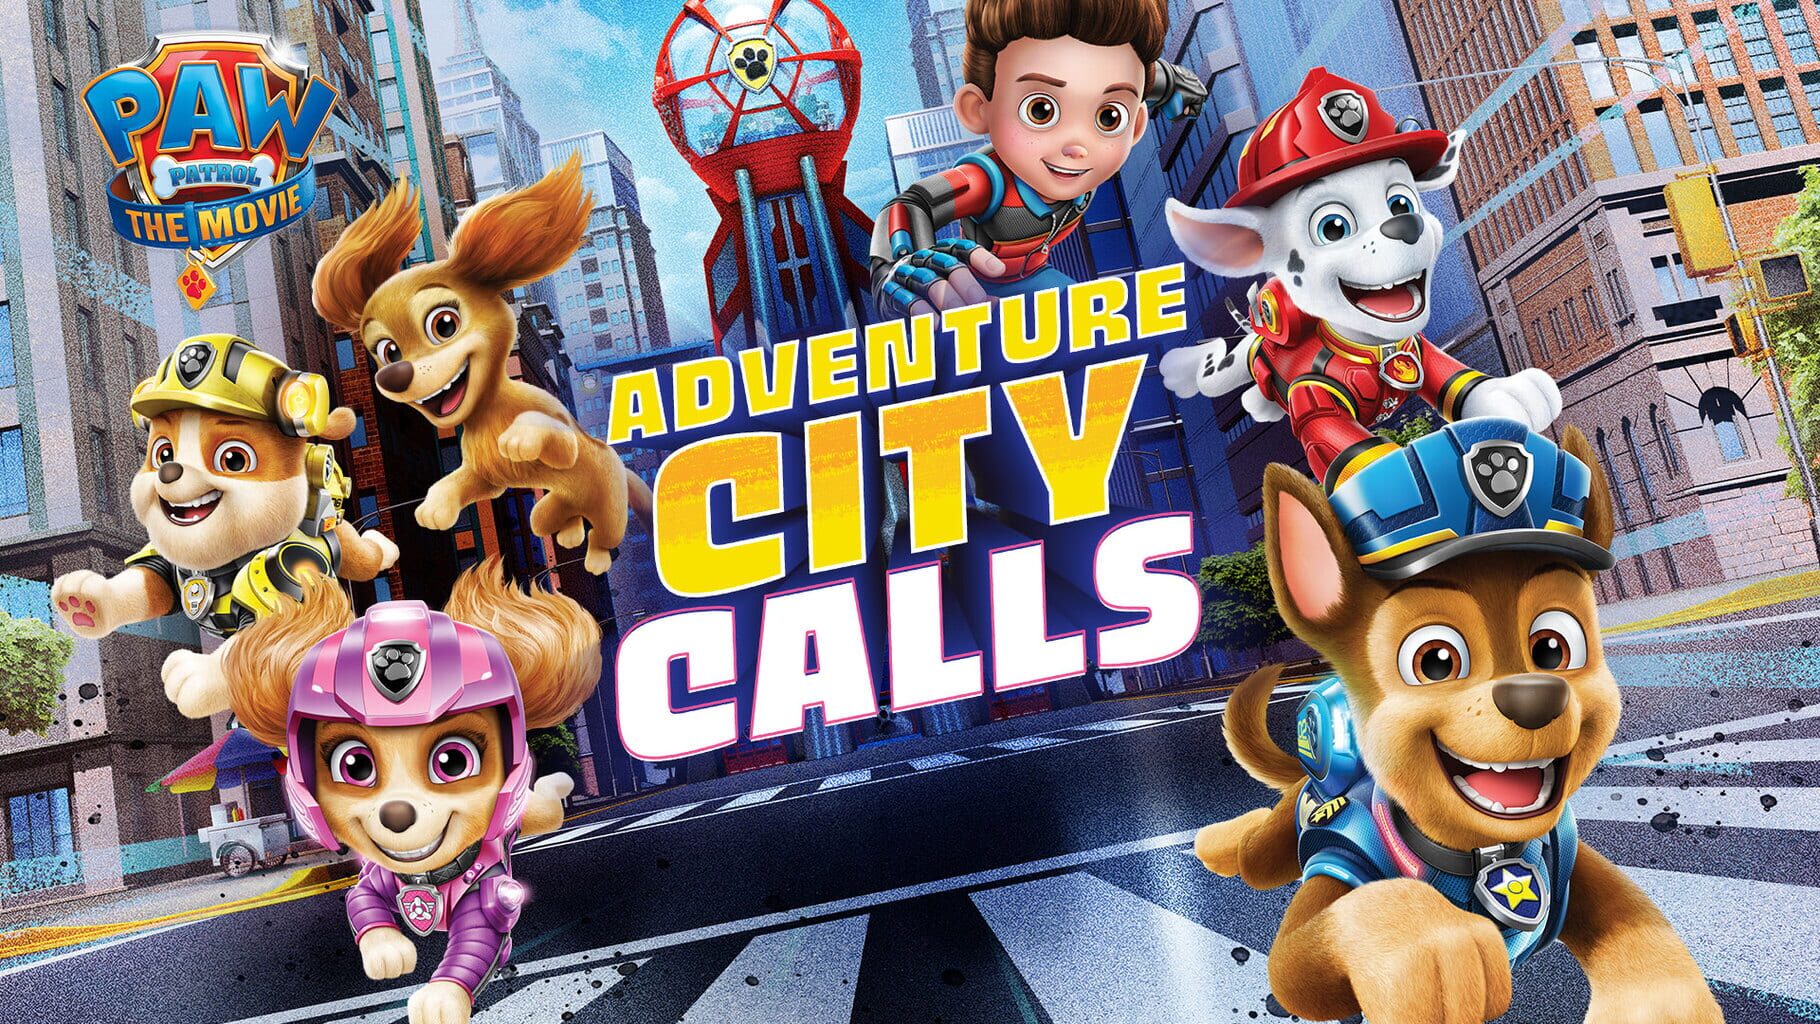 Paw Patrol the Movie: Adventure City Calls artwork